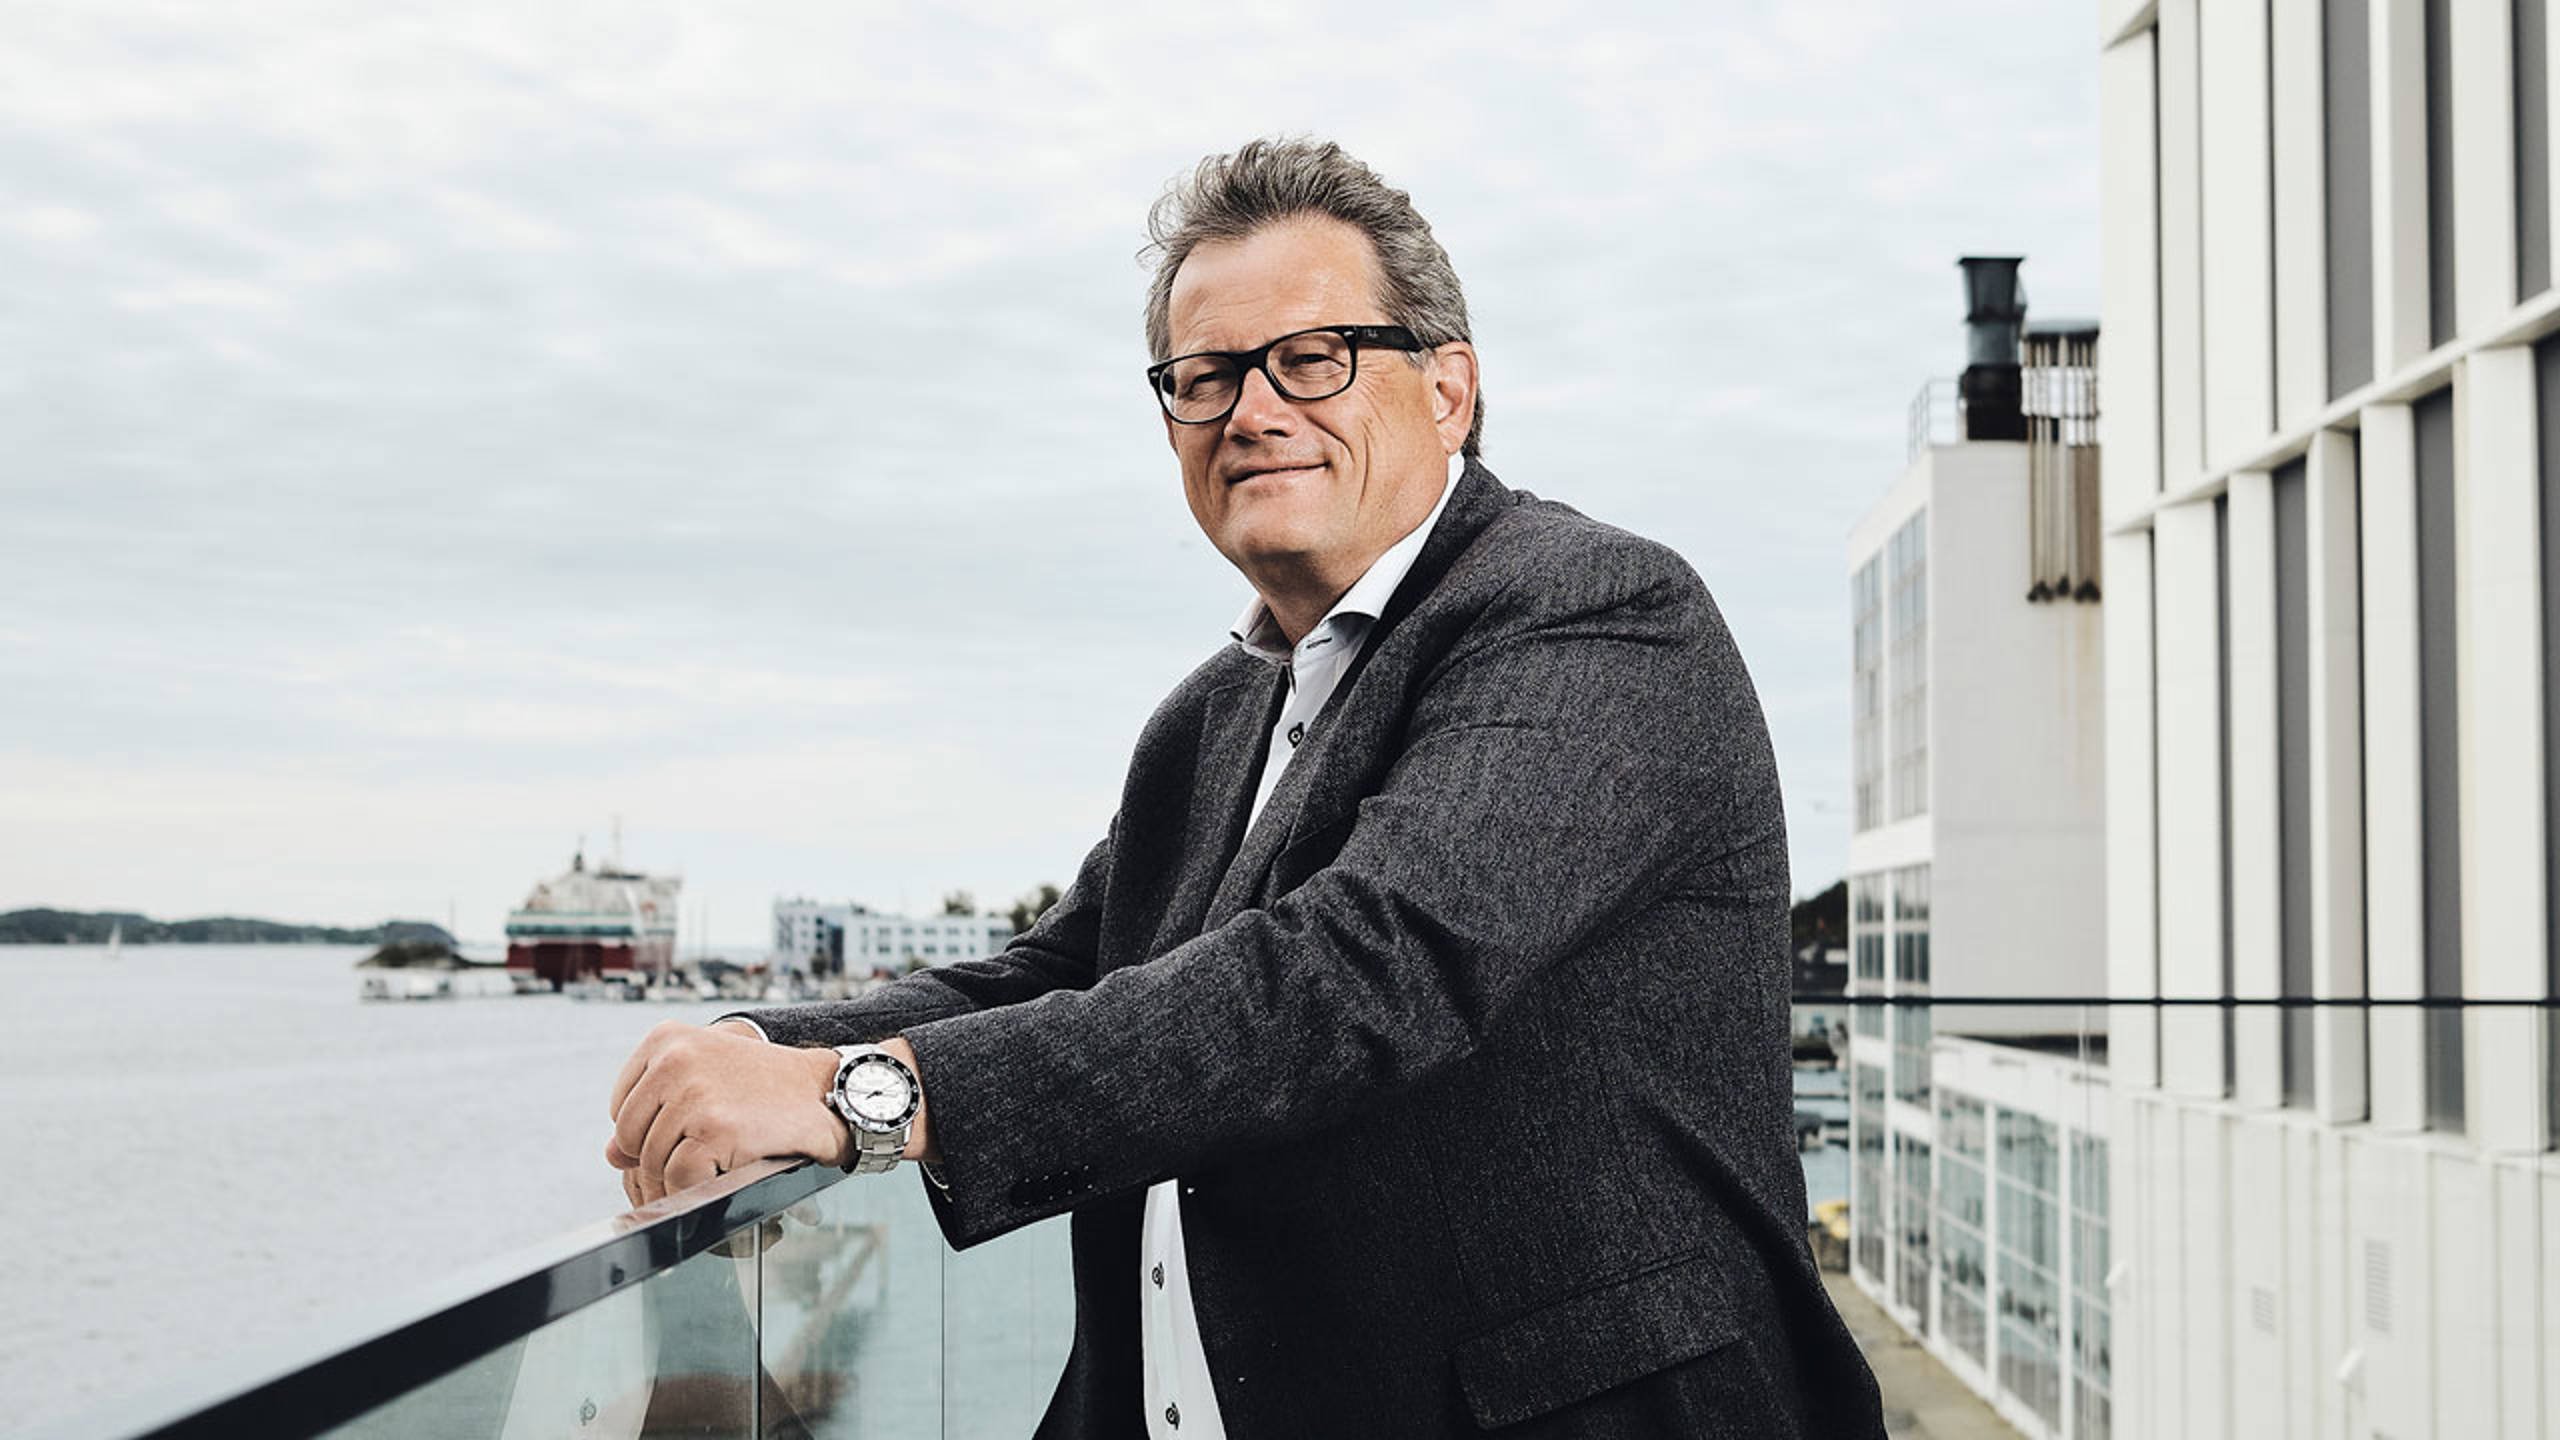 President & CEO Morten Fon